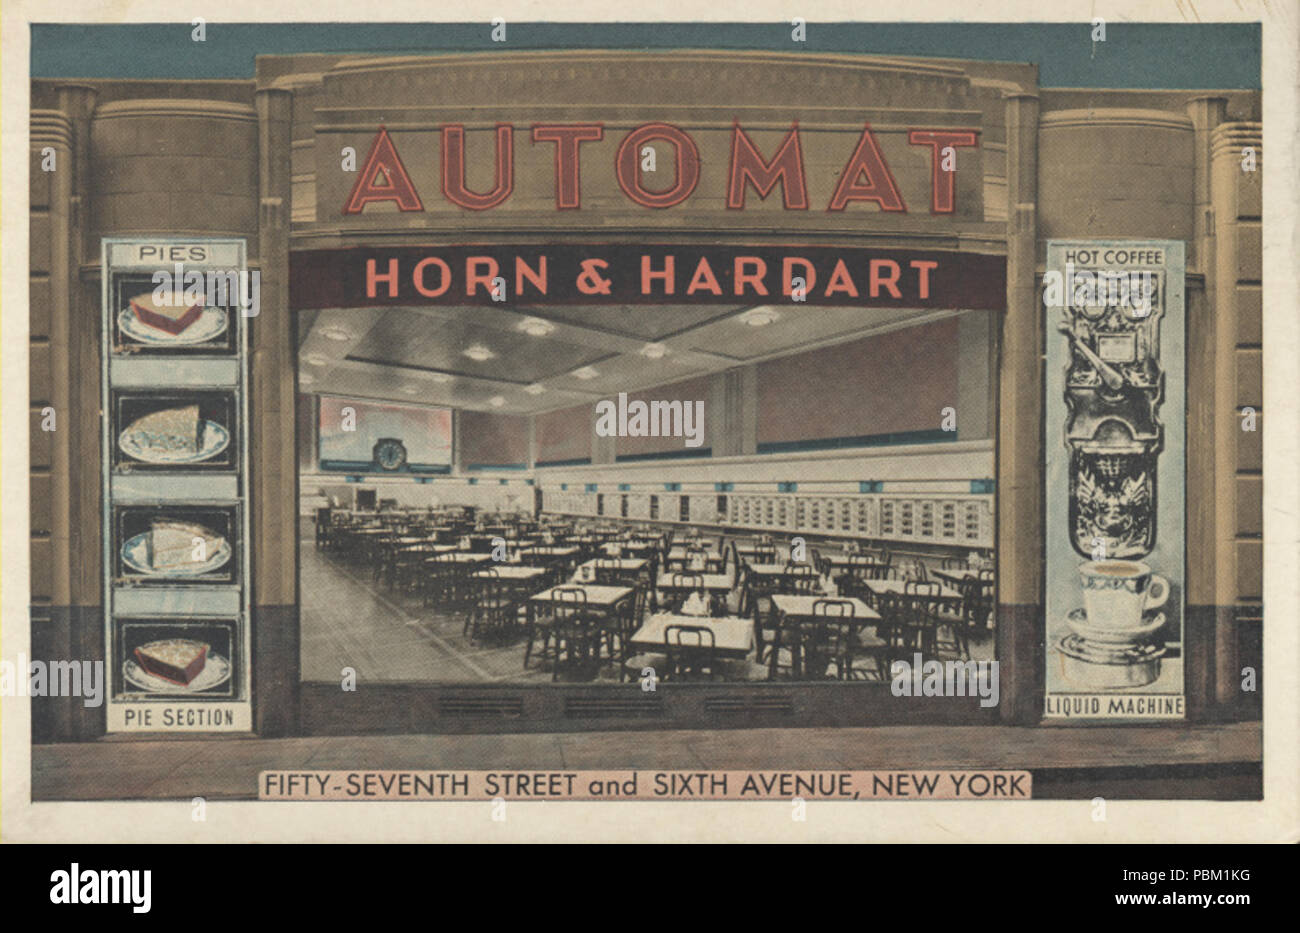 Horn & Hardart Automat, Definition & History